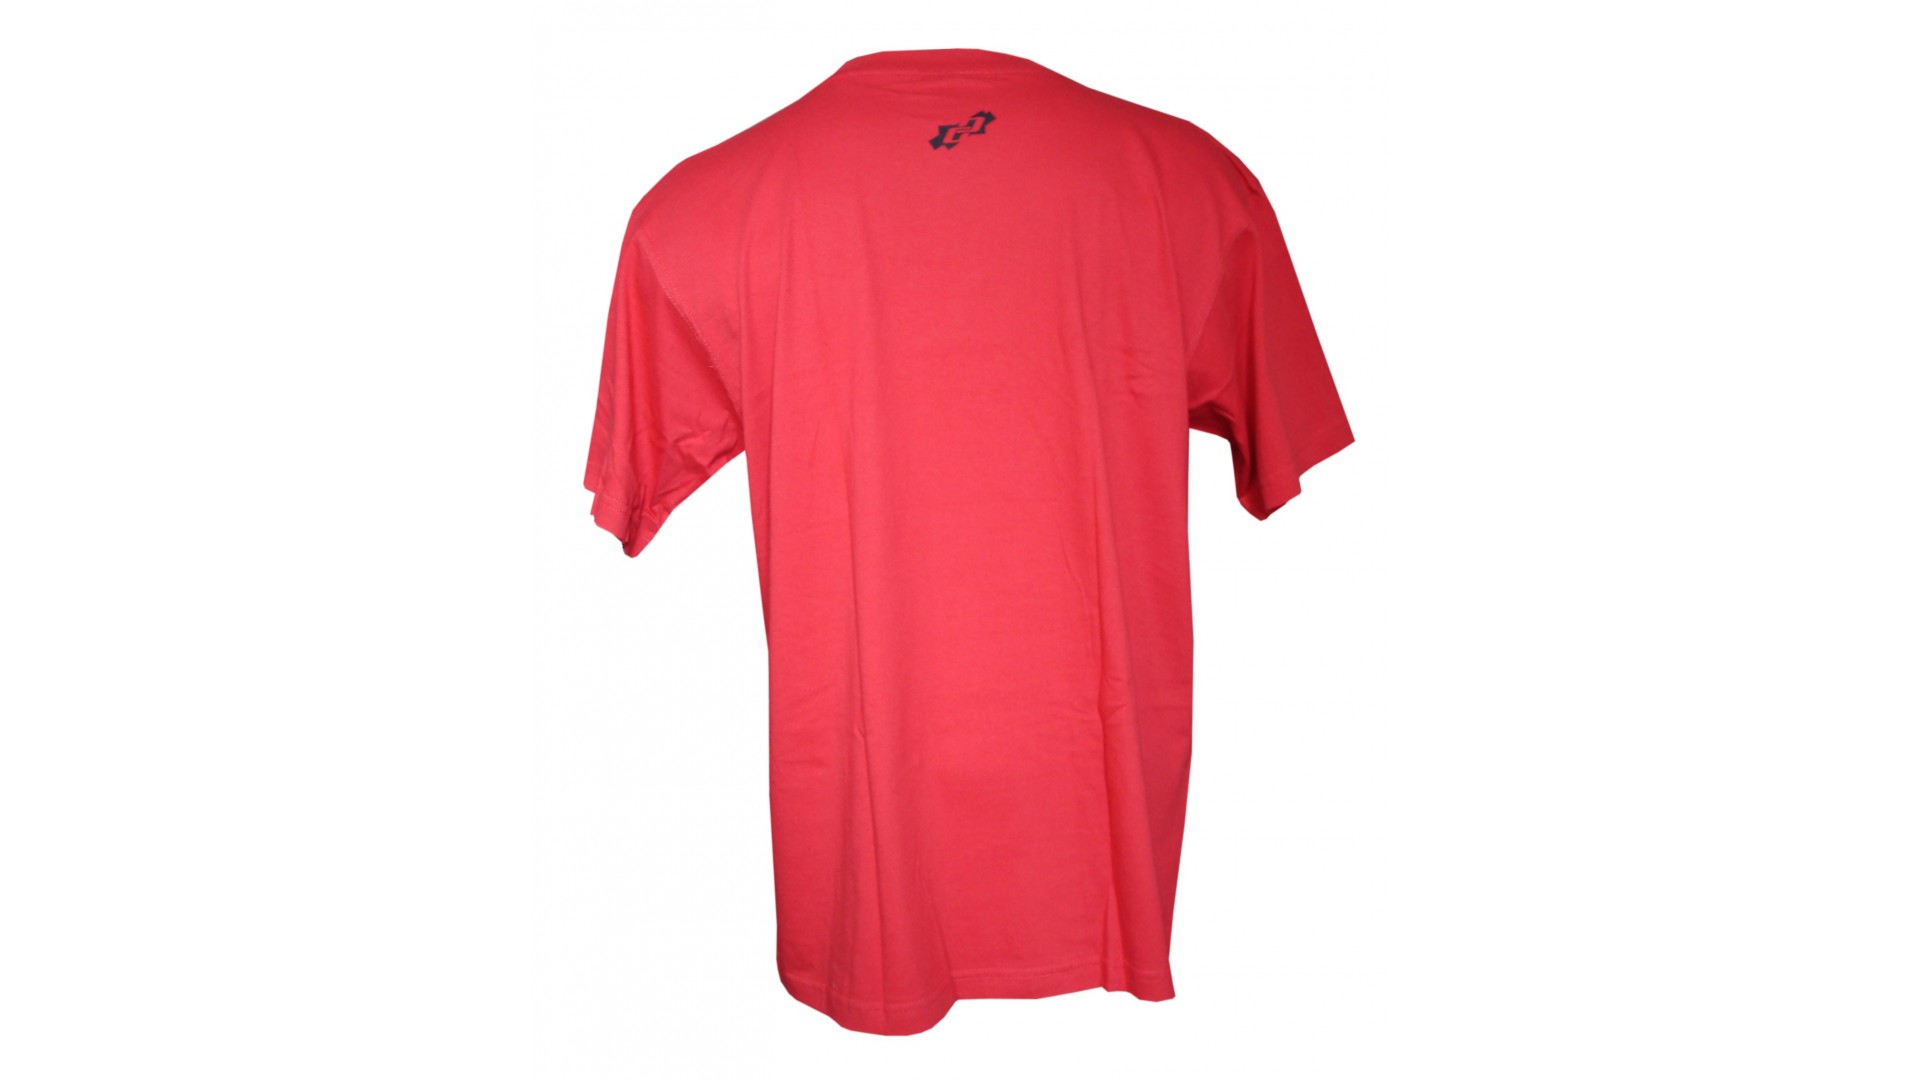 Футболка Ghost T-shirt red год 2015 вид сзади